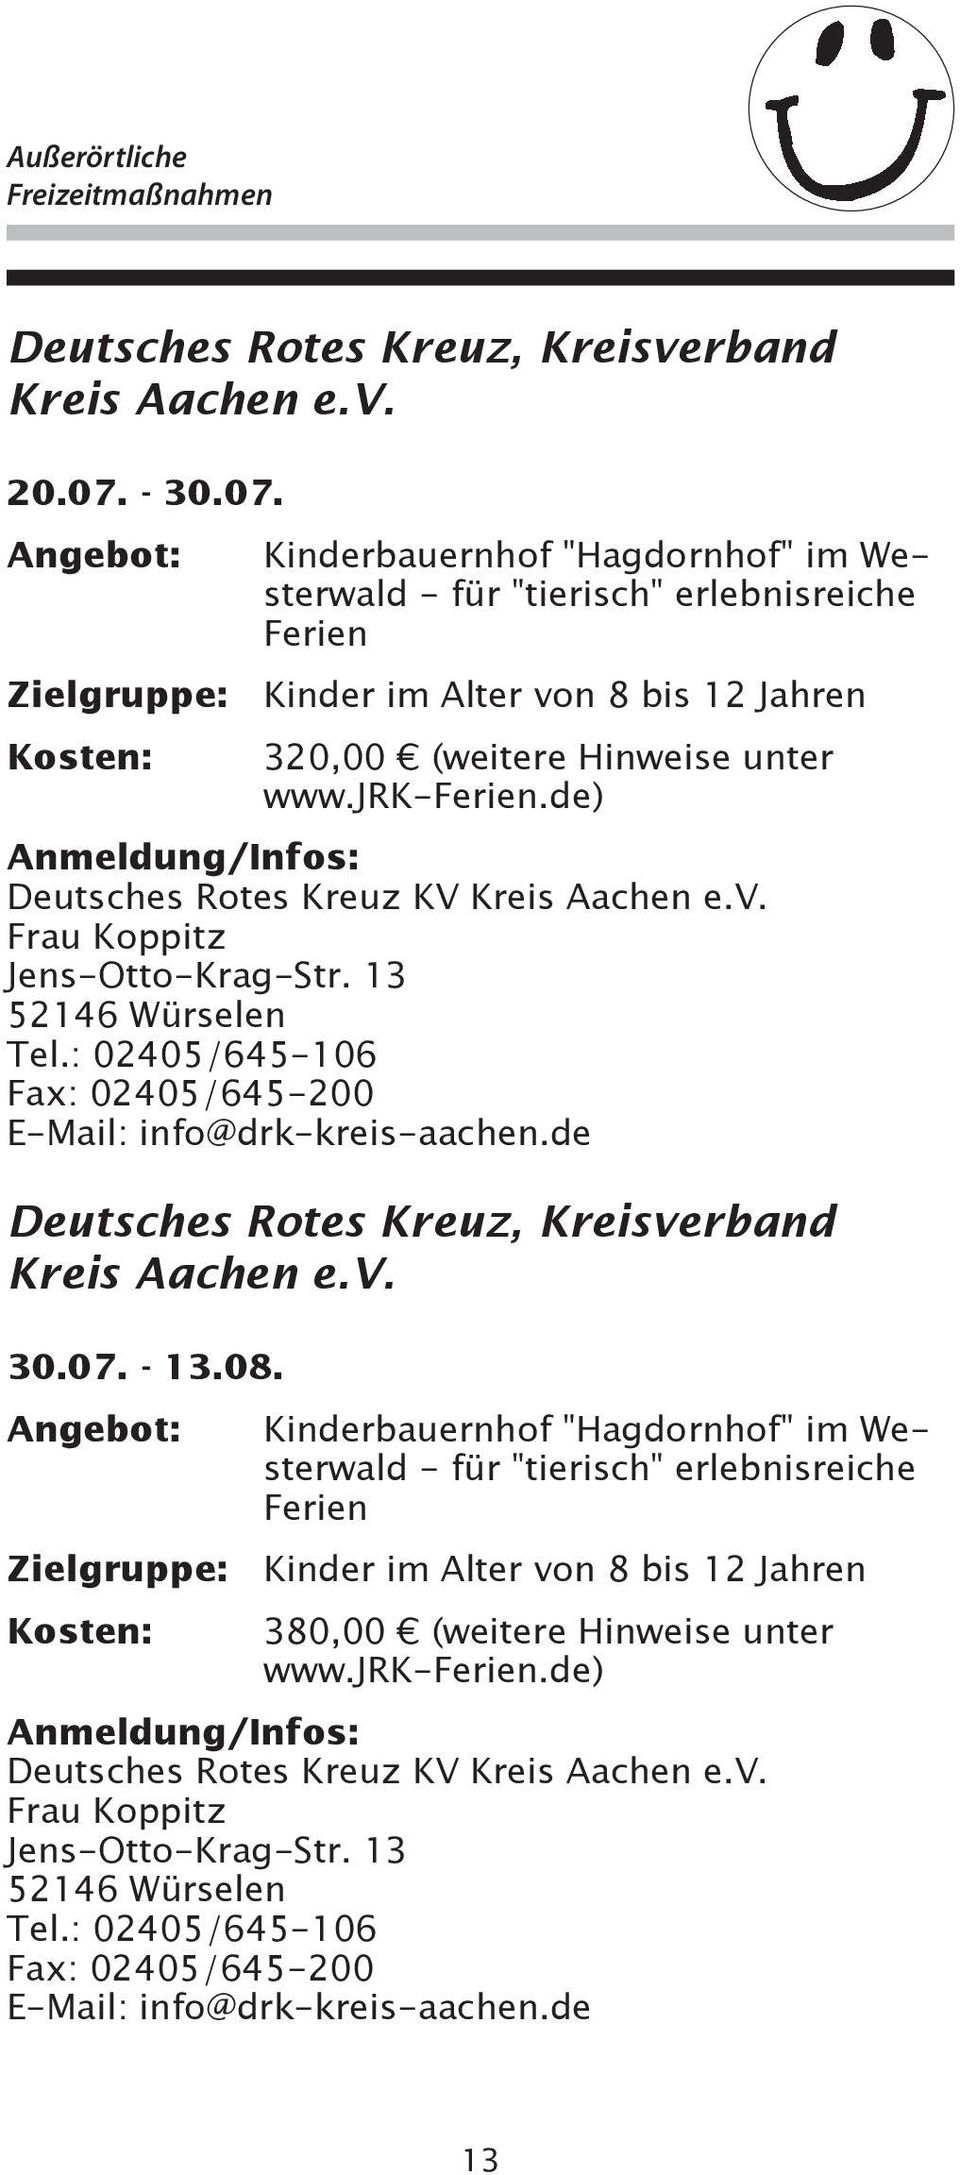 de) Deutsches Rotes Kreuz KV Kreis Aachen e.v. Frau Koppitz Jens-Otto-Krag-Str. 13 52146 Würselen Tel.: 02405/645-106 Fax: 02405/645-200 E-Mail: info@drk-kreis-aachen.